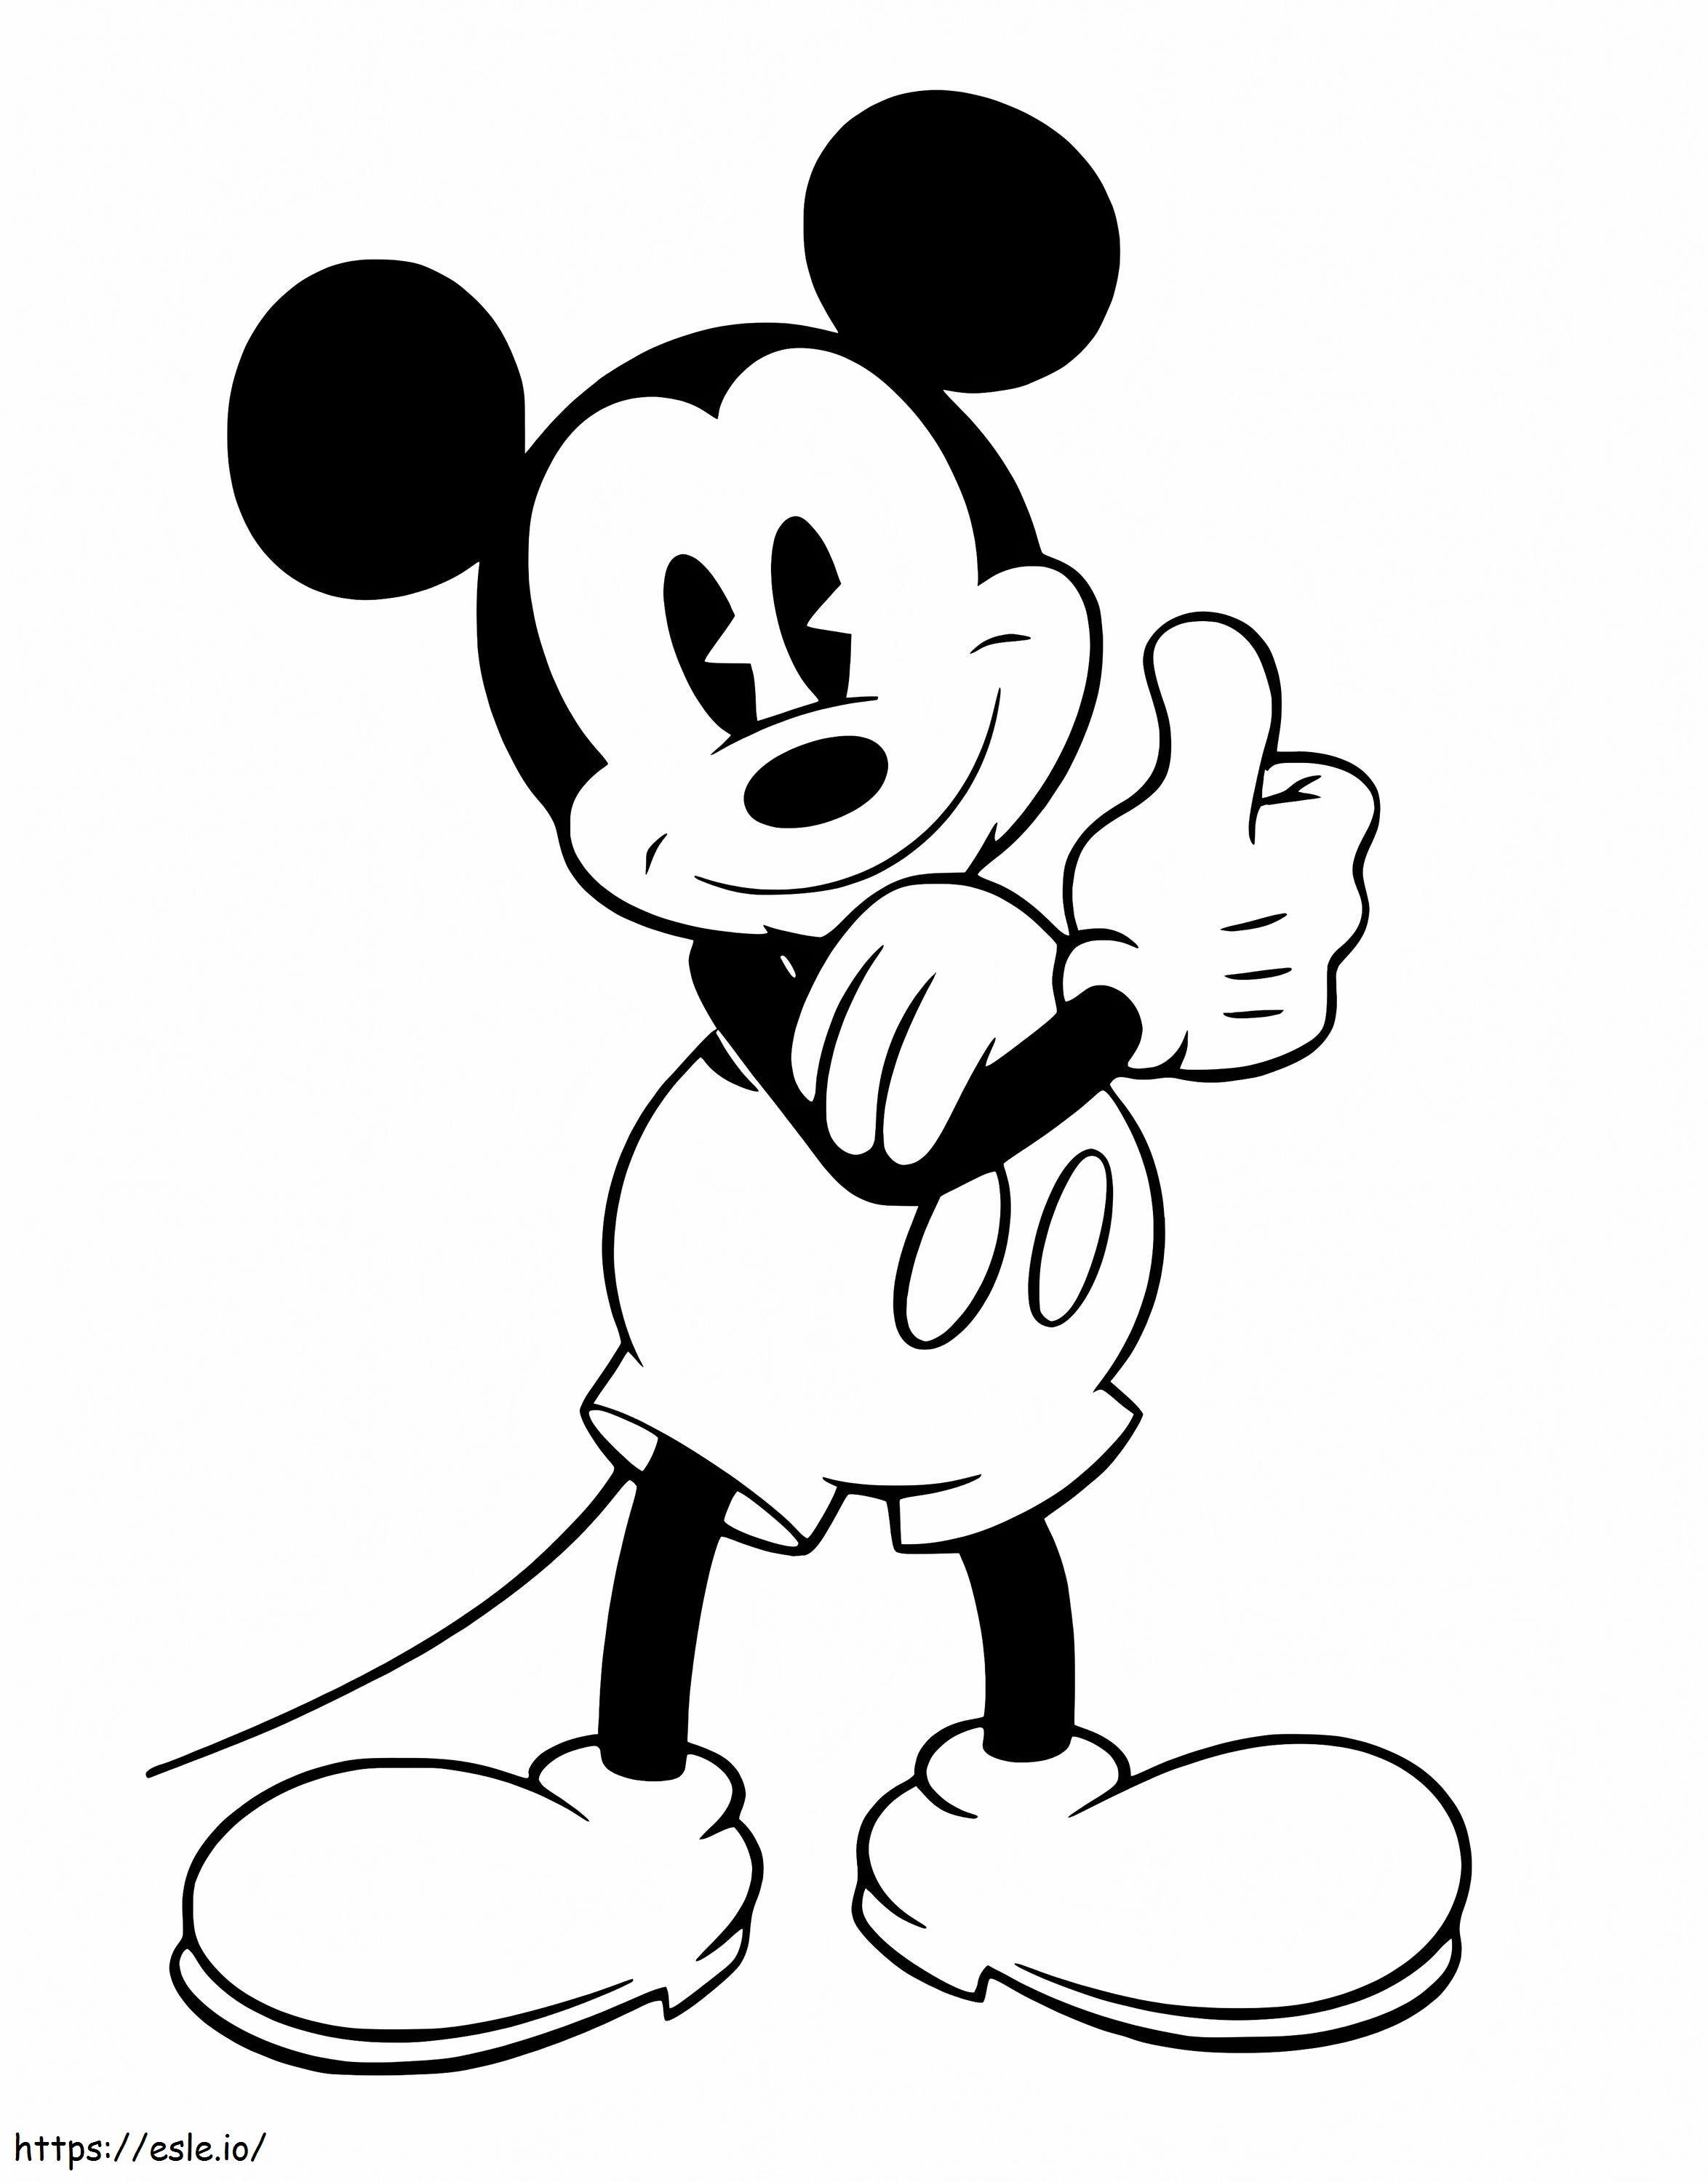 Mickey-Mouse-like ausmalbilder